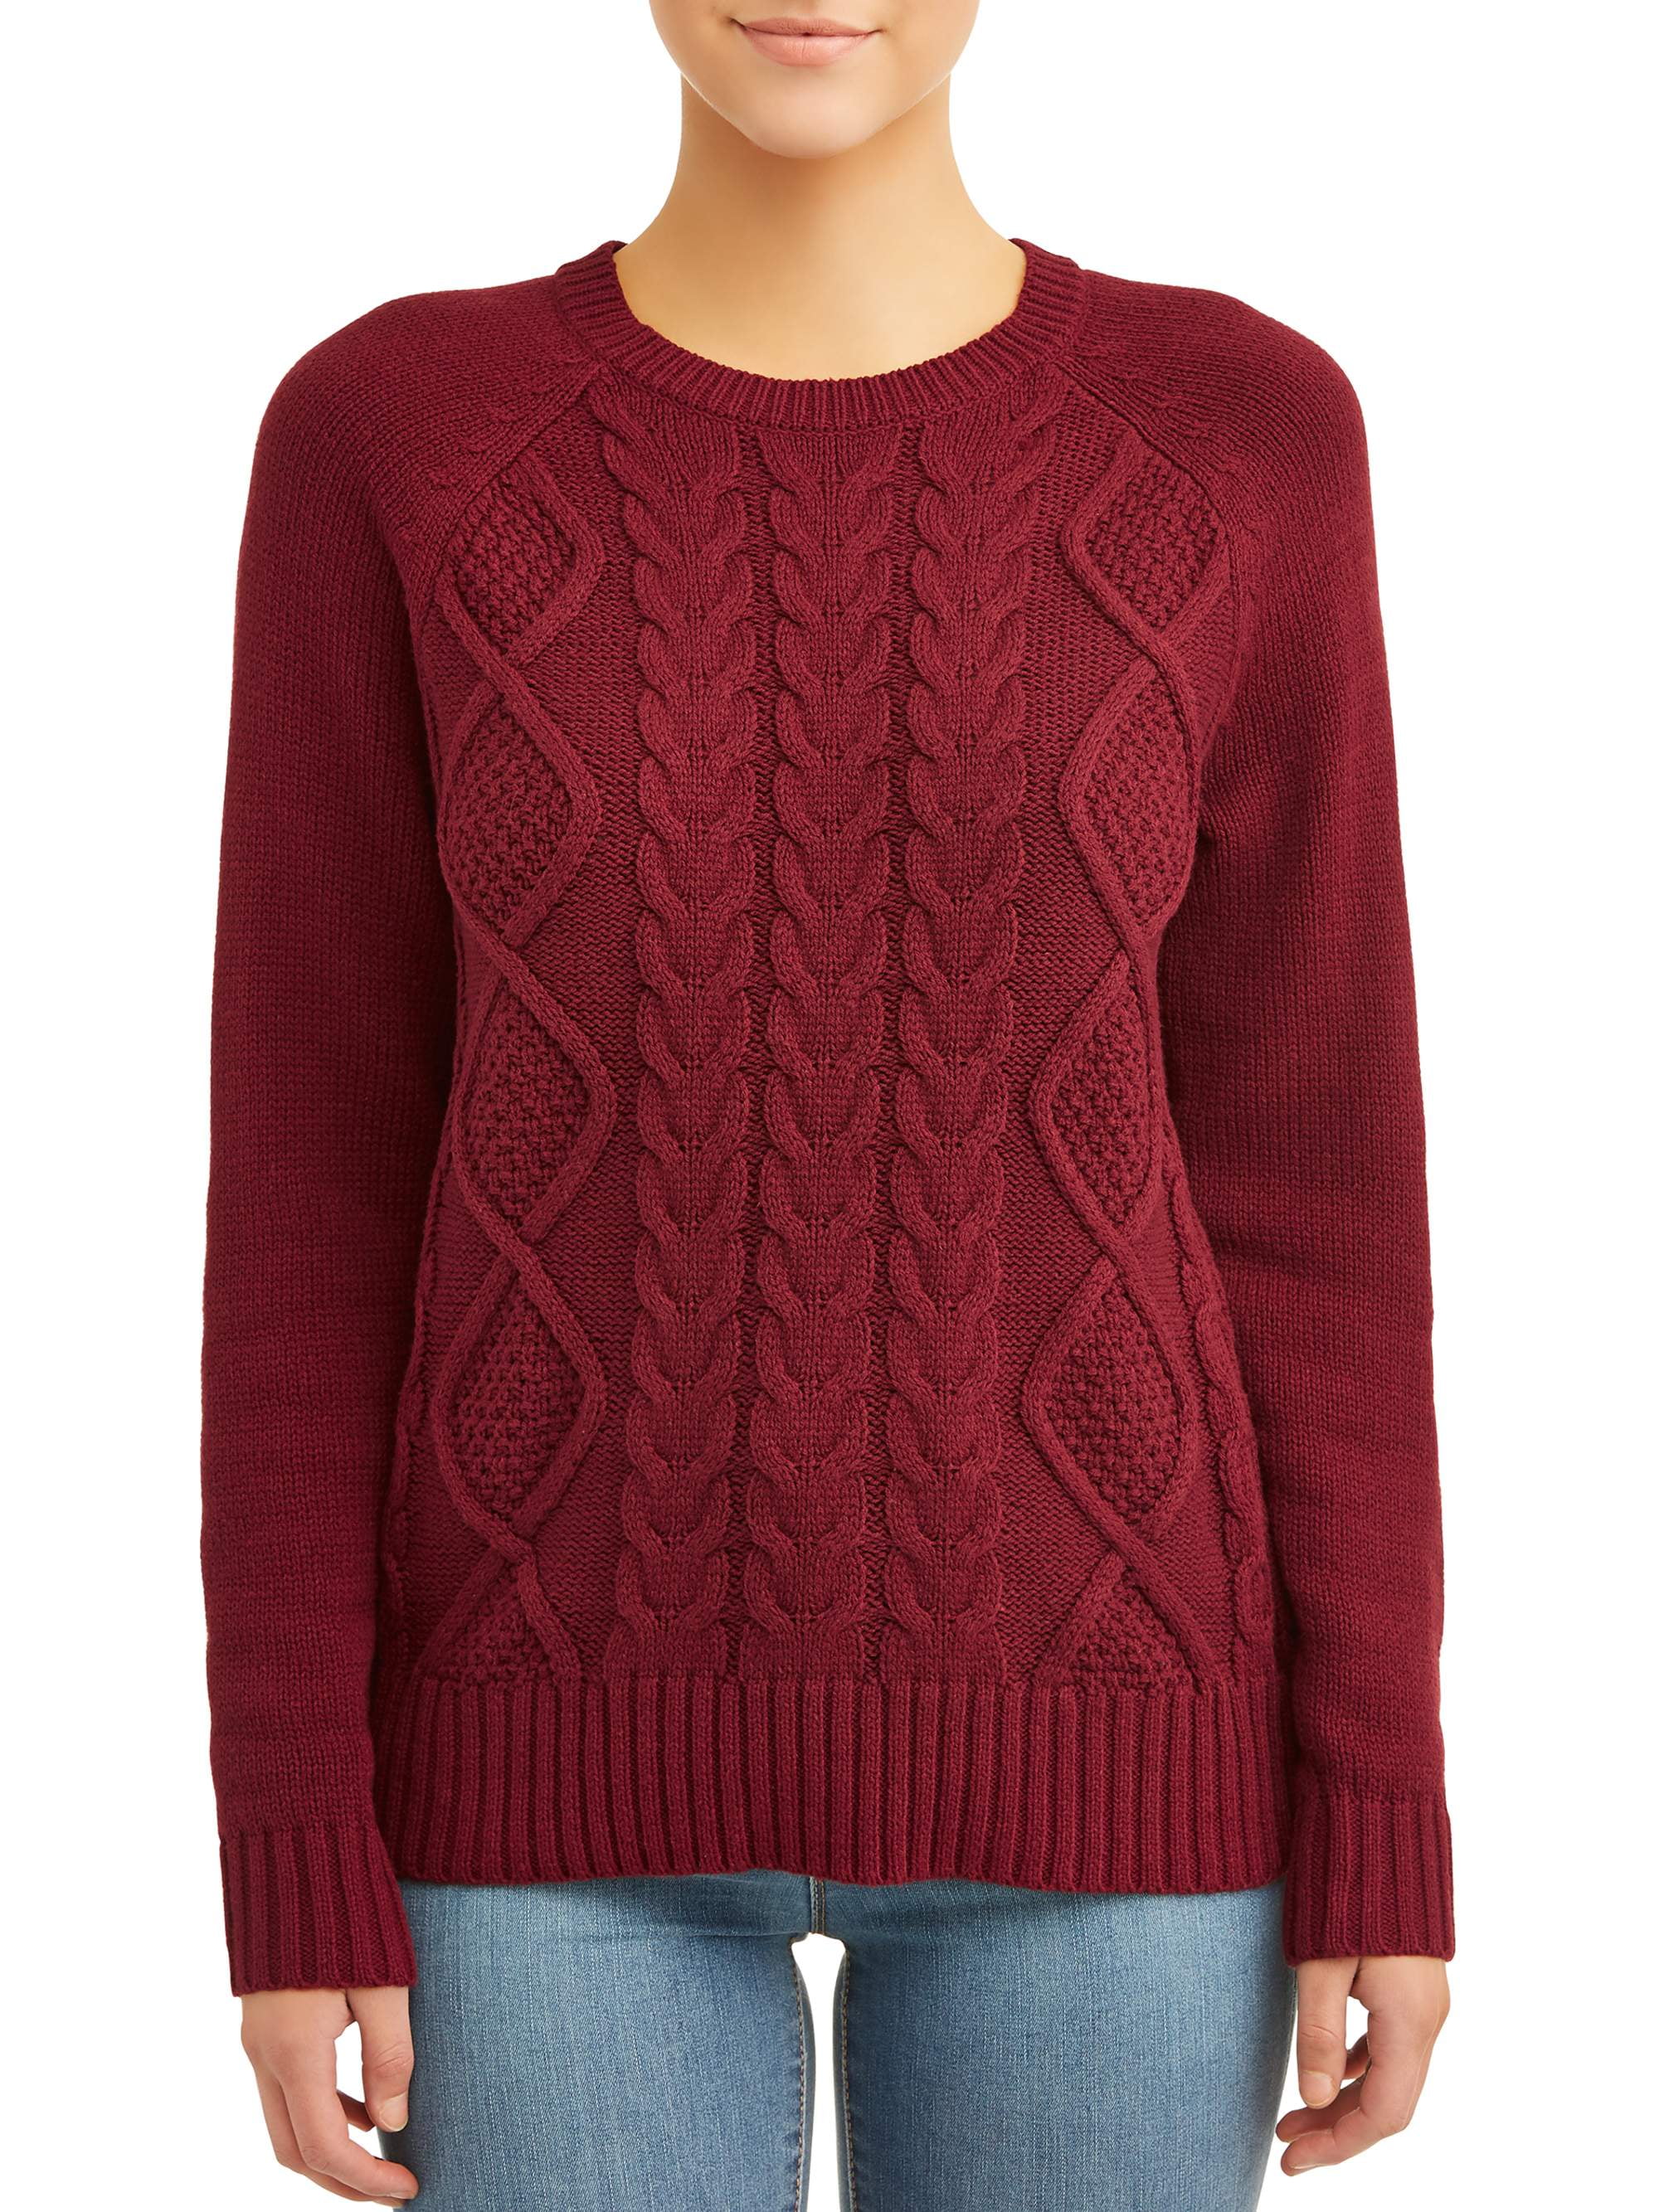 Jillian Nicole Women's Cableknit Sweater - Walmart.com